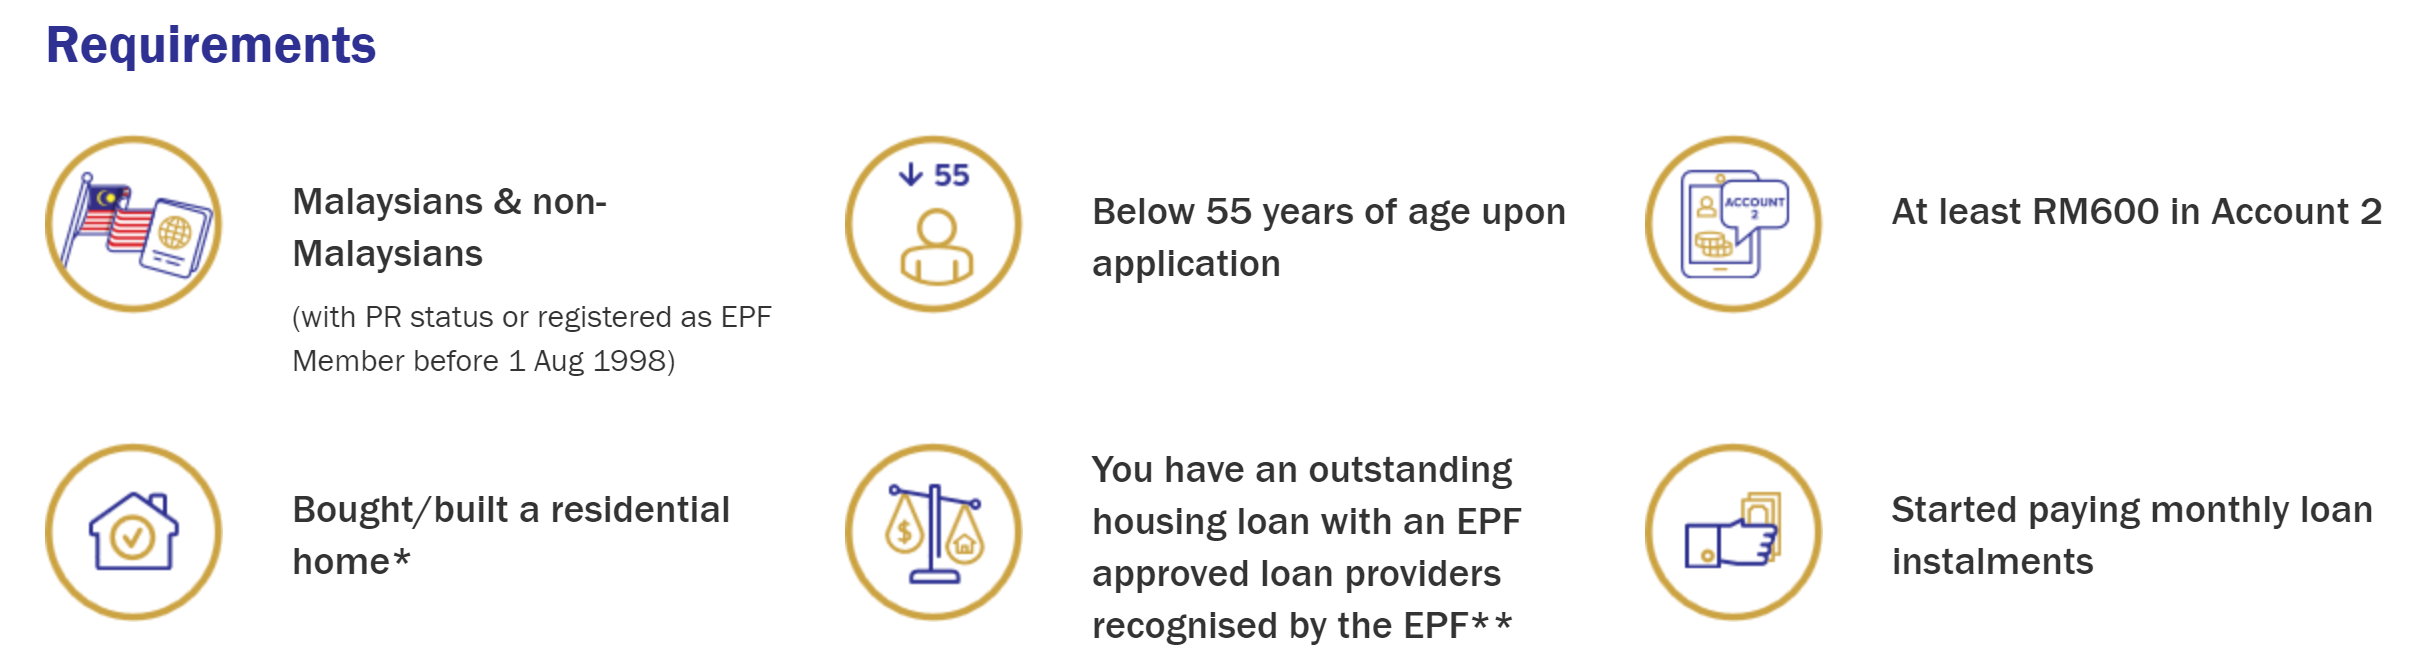 EPF Housing Loan Installment Requirement.PNG